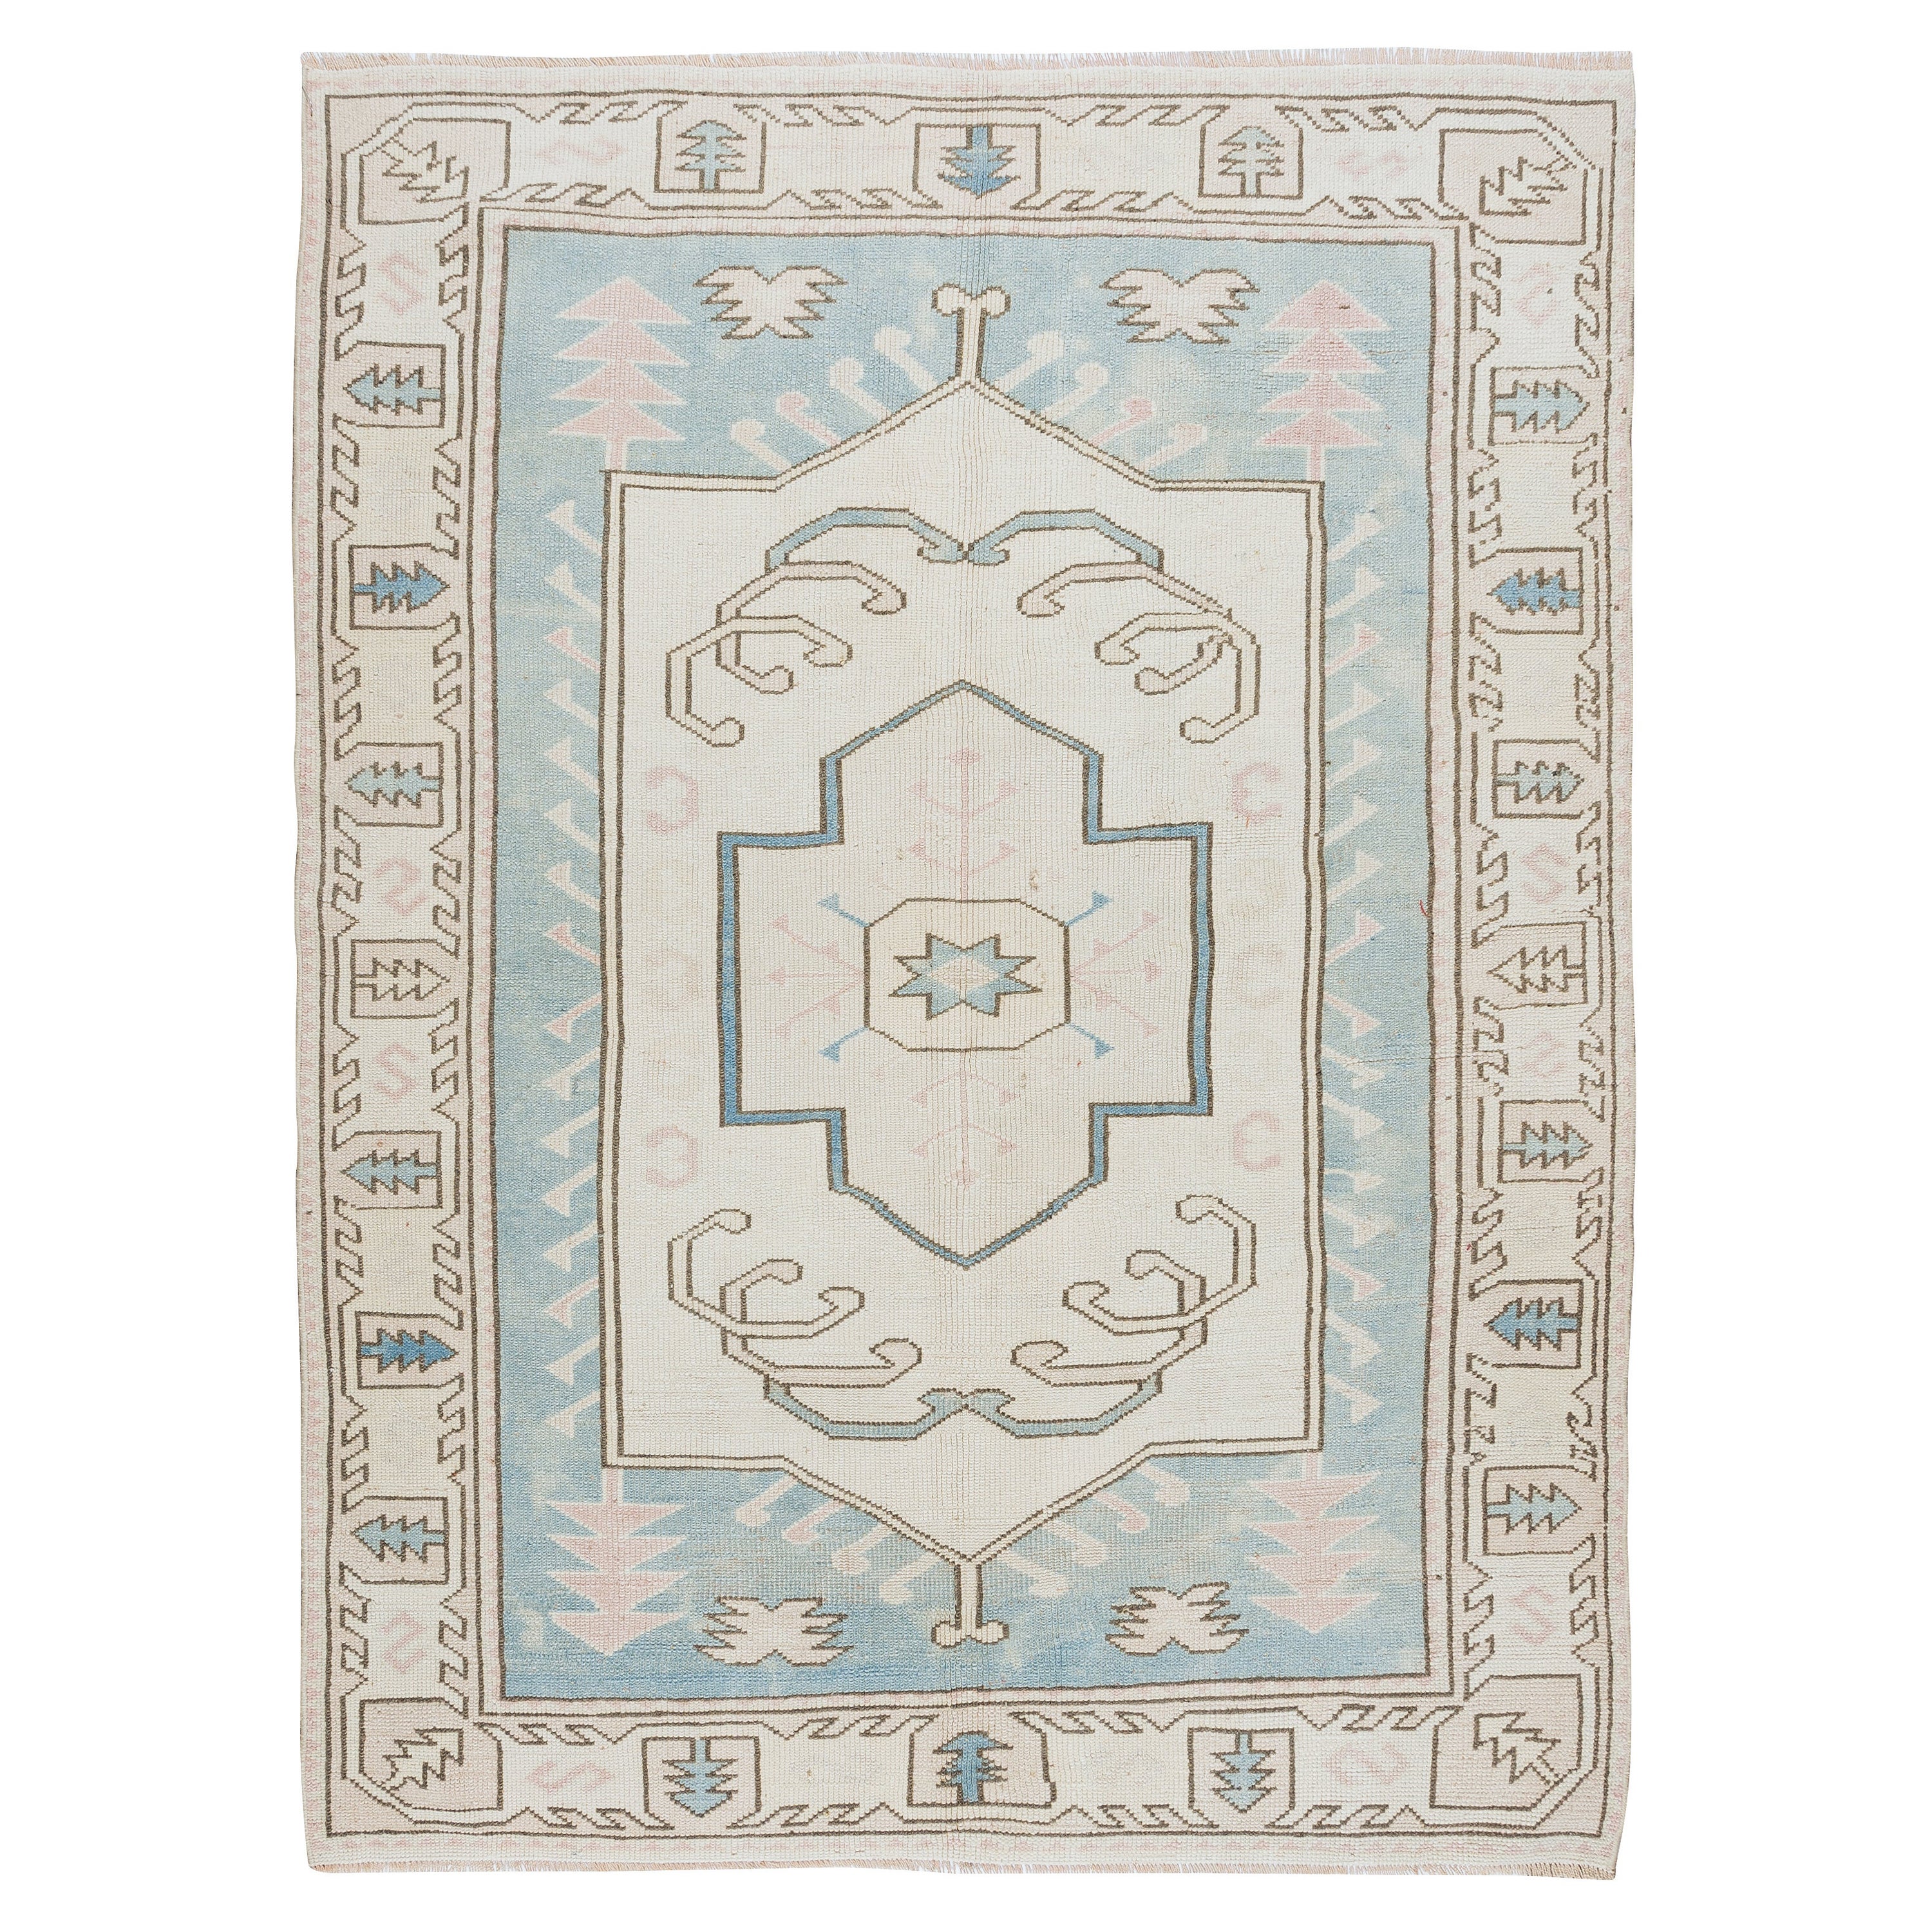 5x6.6 Ft Vintage Handmade Turkish Geometric Wool Area Rug in Light Blue & Cream For Sale